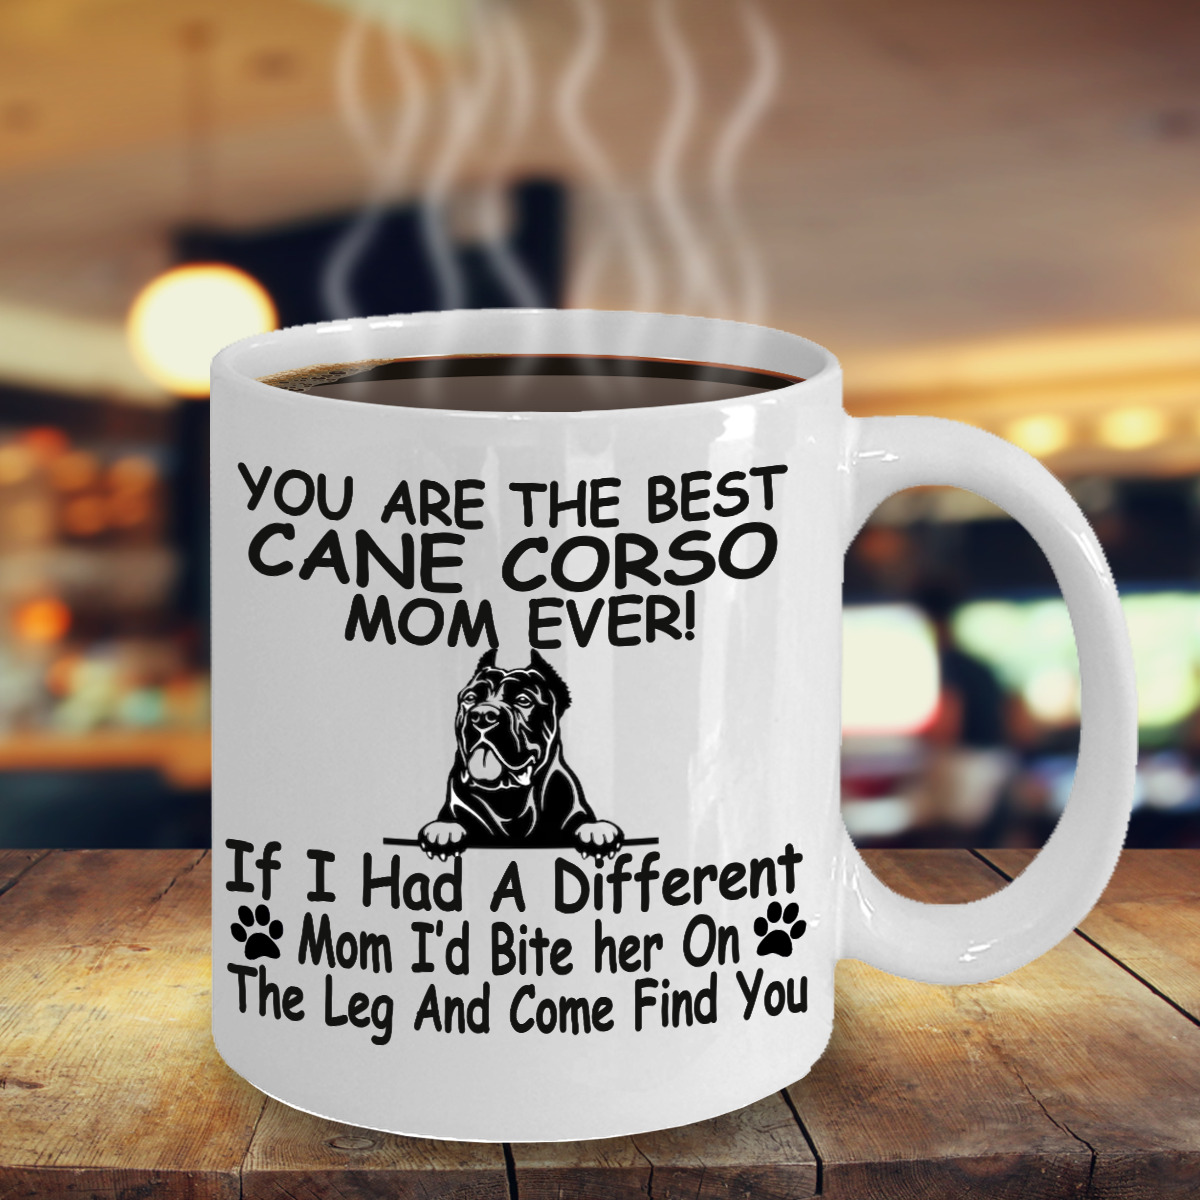 Cane Corso Dog,Italian Mastiff,Italian Corso,Cane Corso Italian,Cups,Mugs